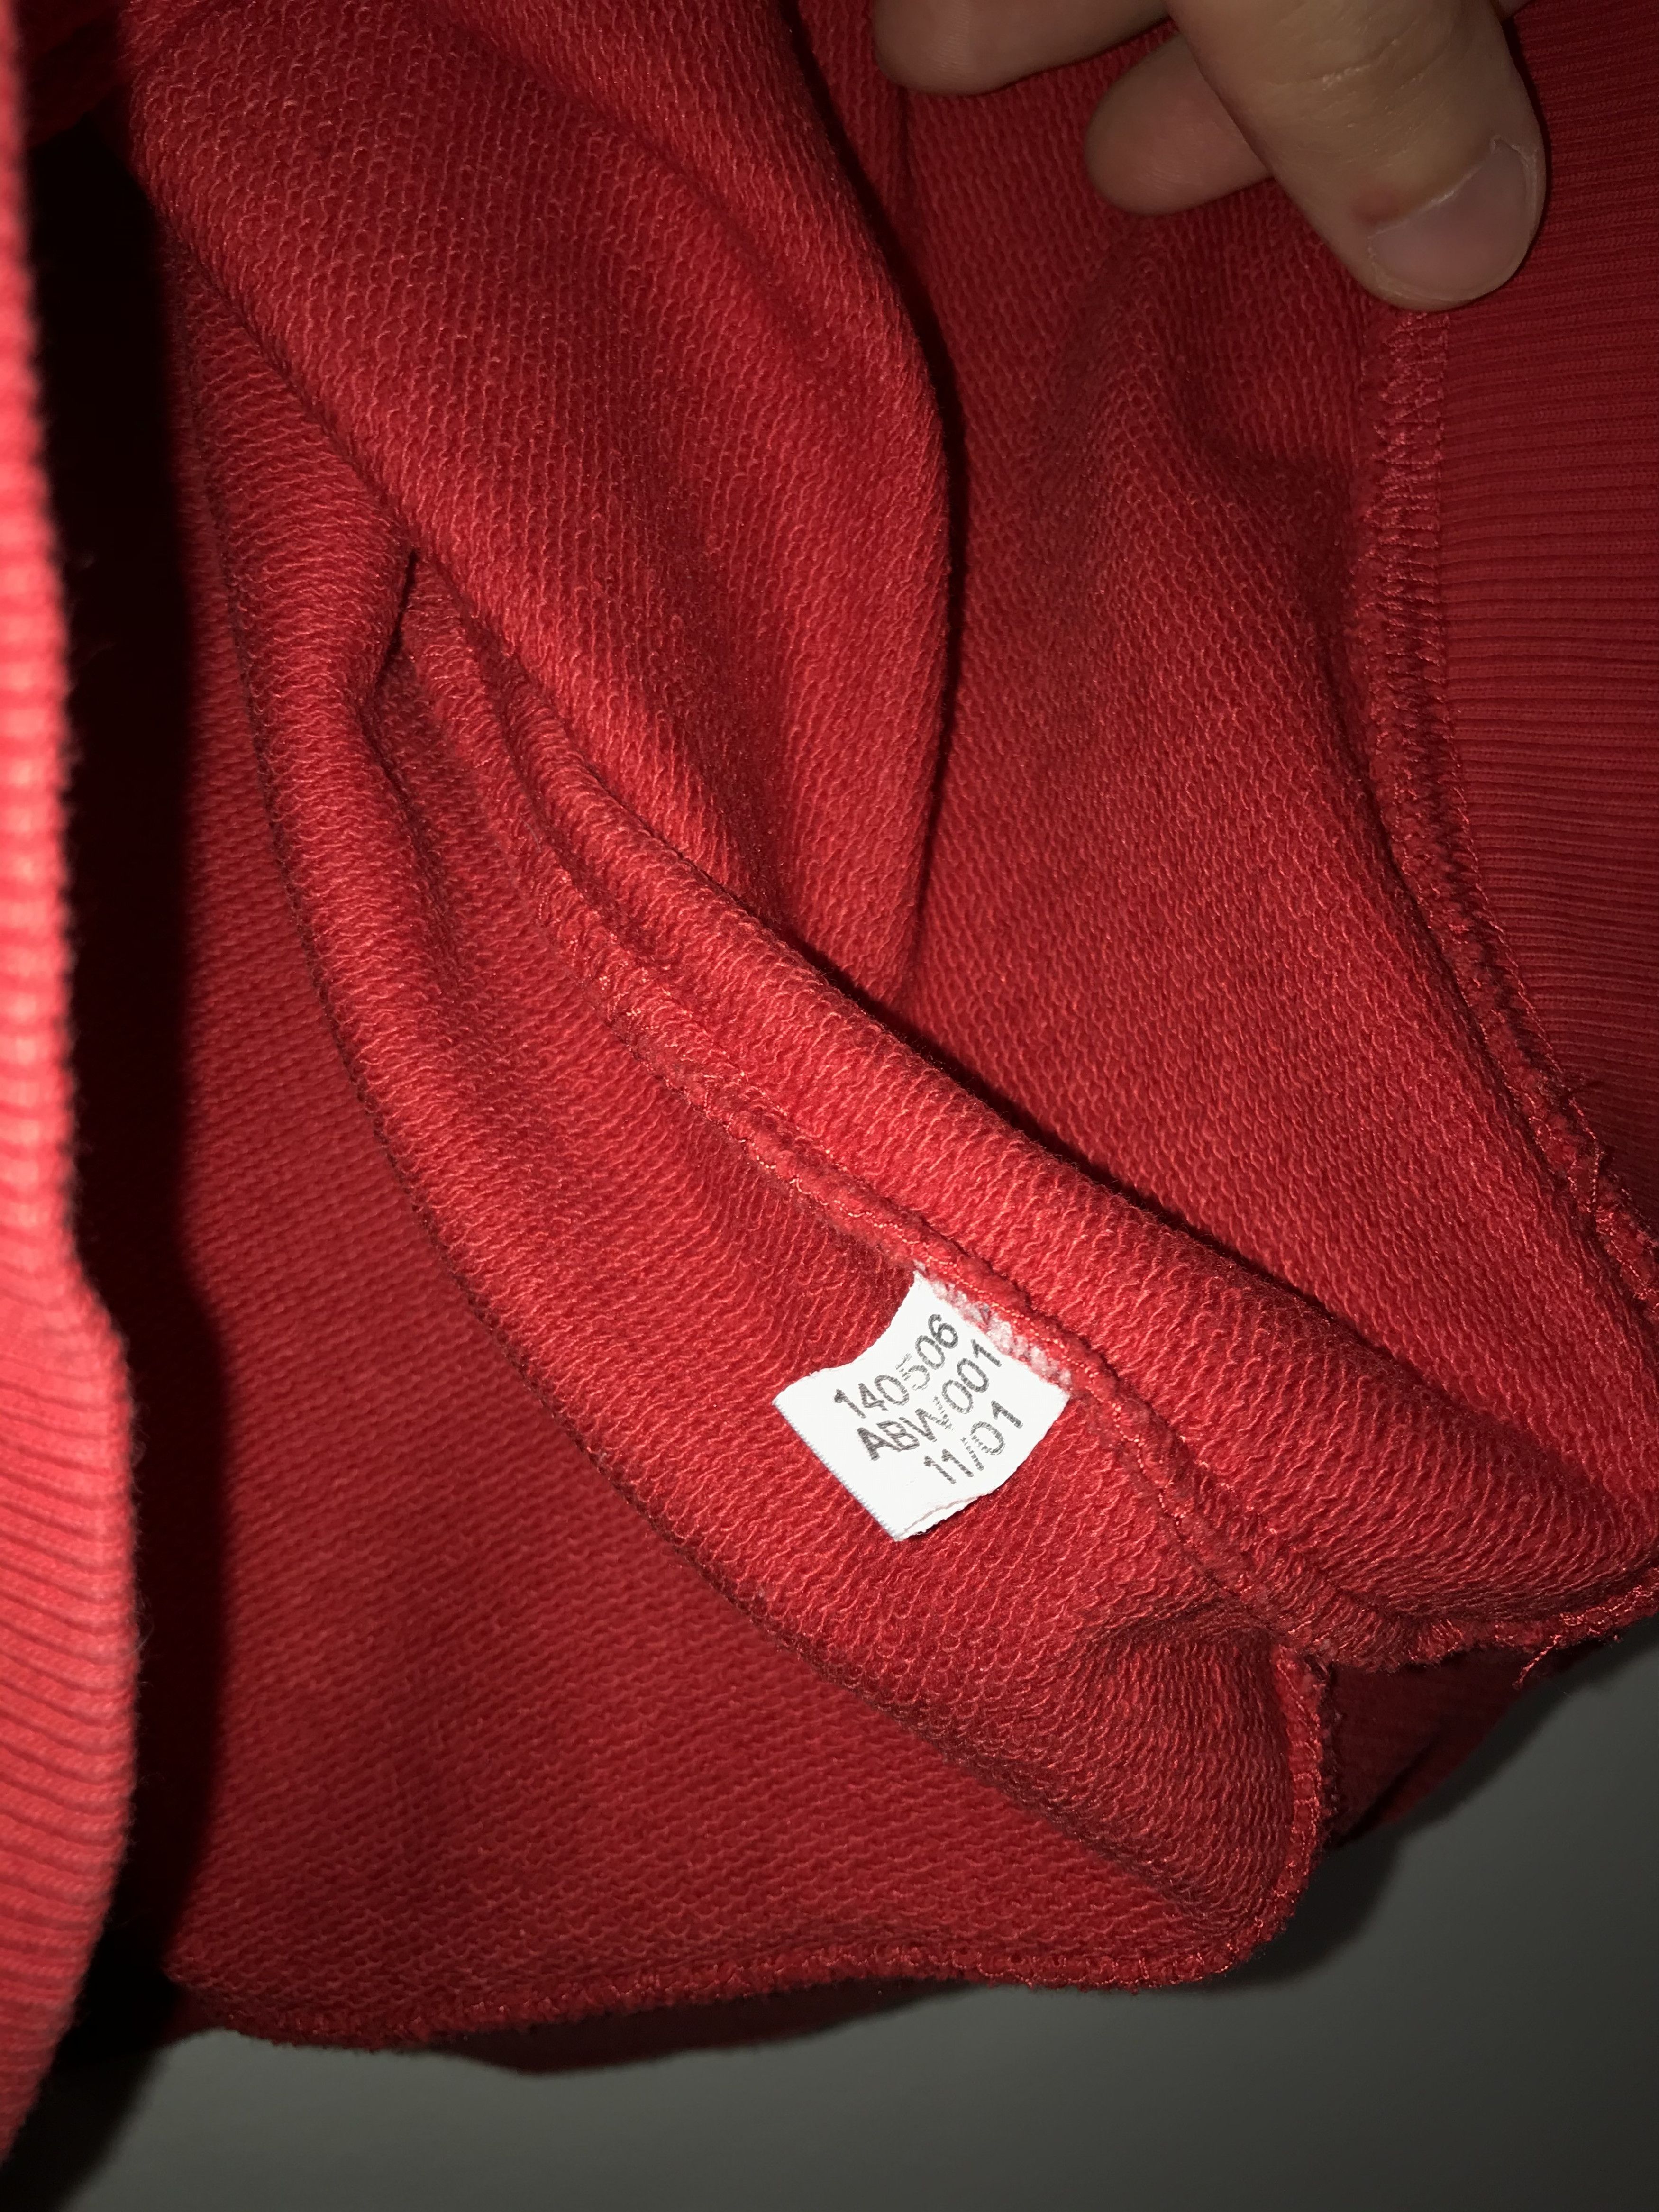 Adidas Vintage Adidas Red Sweatshirt Originals Equipment 00s Size US L / EU 52-54 / 3 - 7 Thumbnail